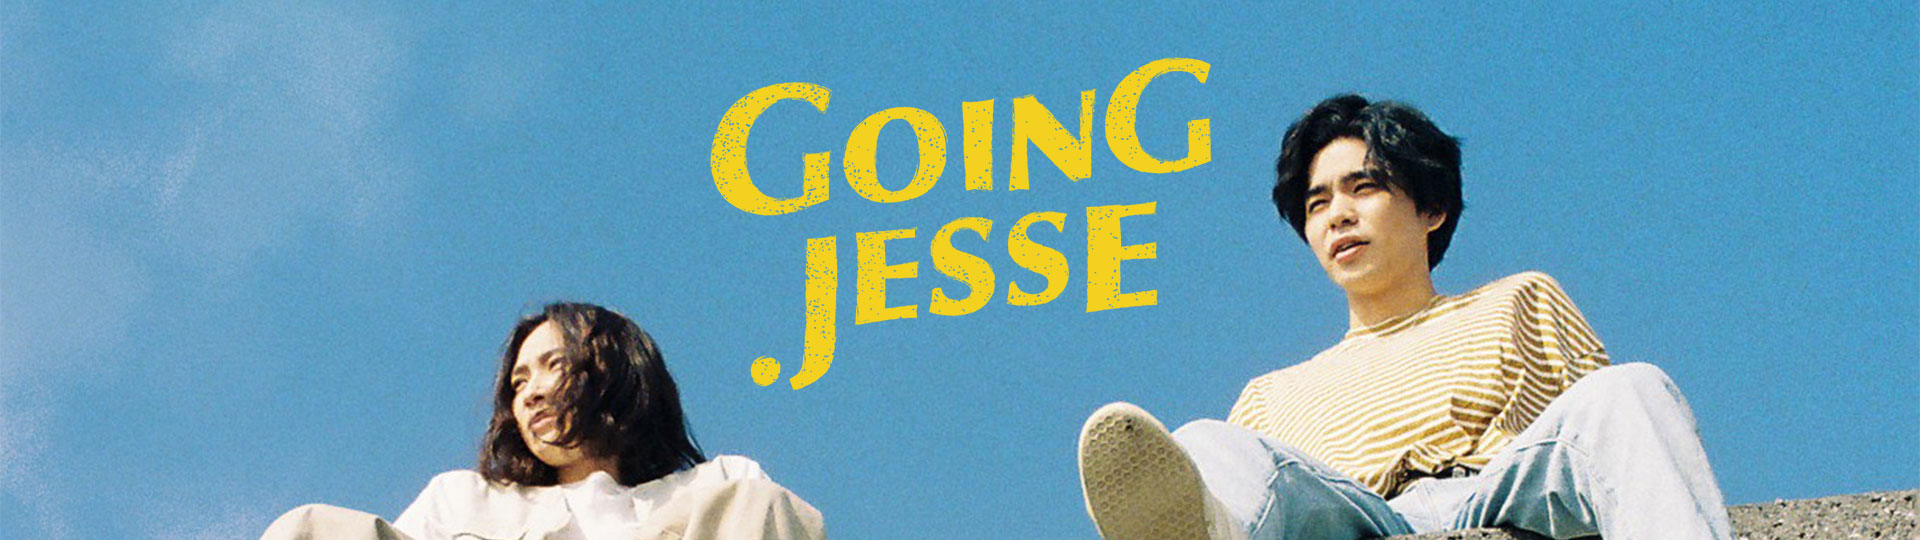 Going Jesse